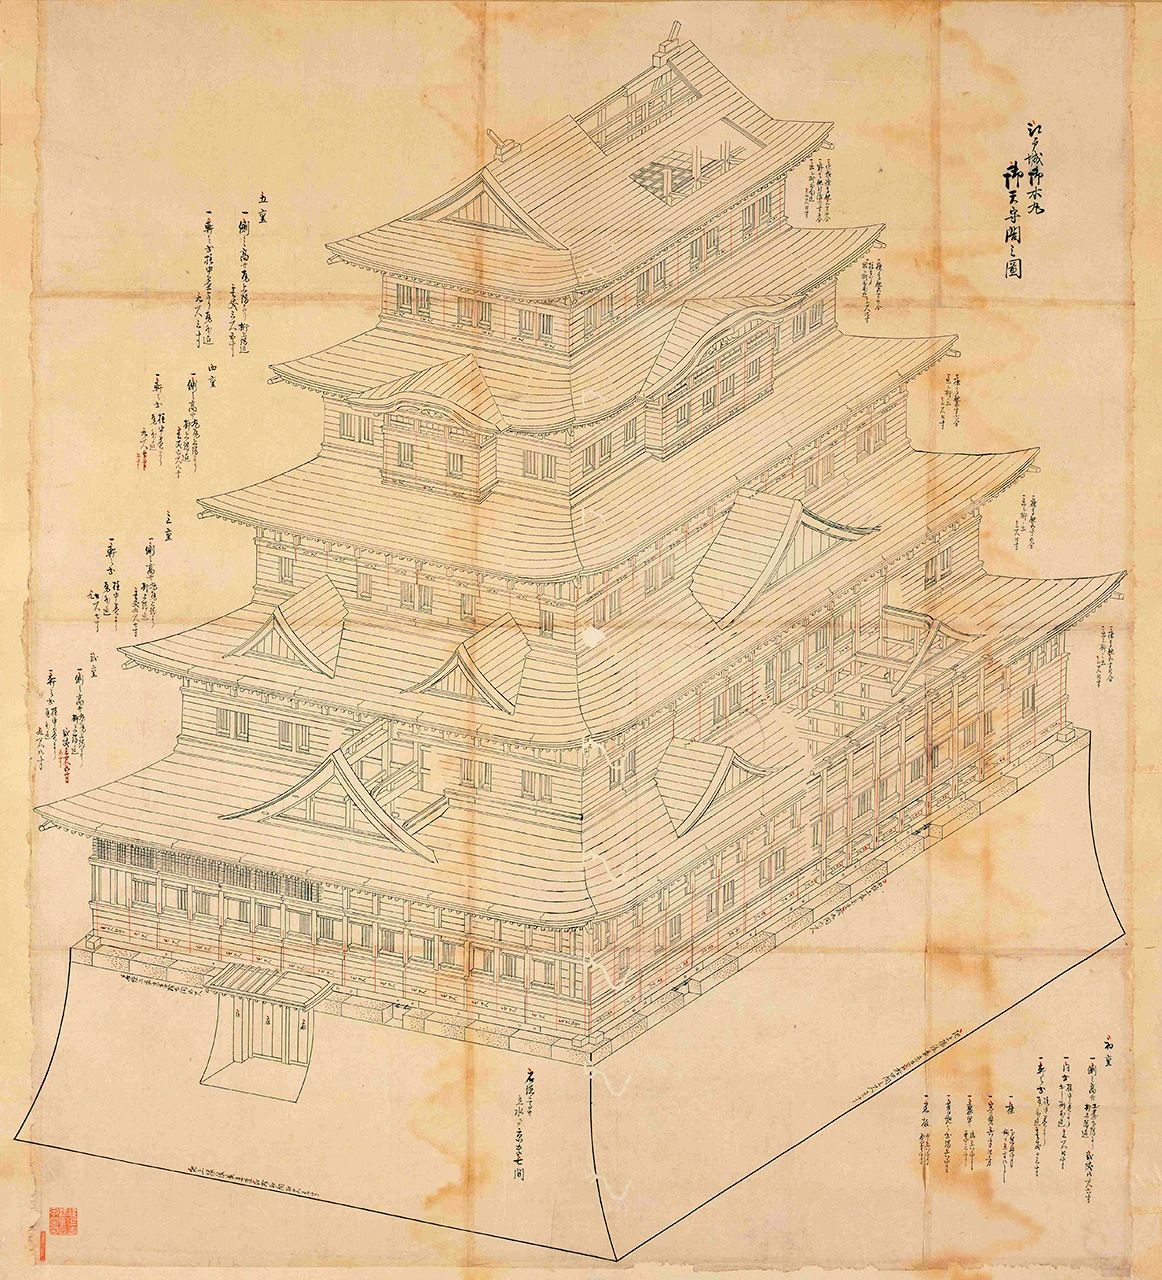 Edojō go-honmaru go-tenshukaku tatekata no zu, a structural plan of the honmaru tenshu at Edo Castle which was completed in 1638 under the third Tokugawa shōgun Iemitsu. (Courtesy the Tokyo Metropolitan Central Library Special Collection Room)